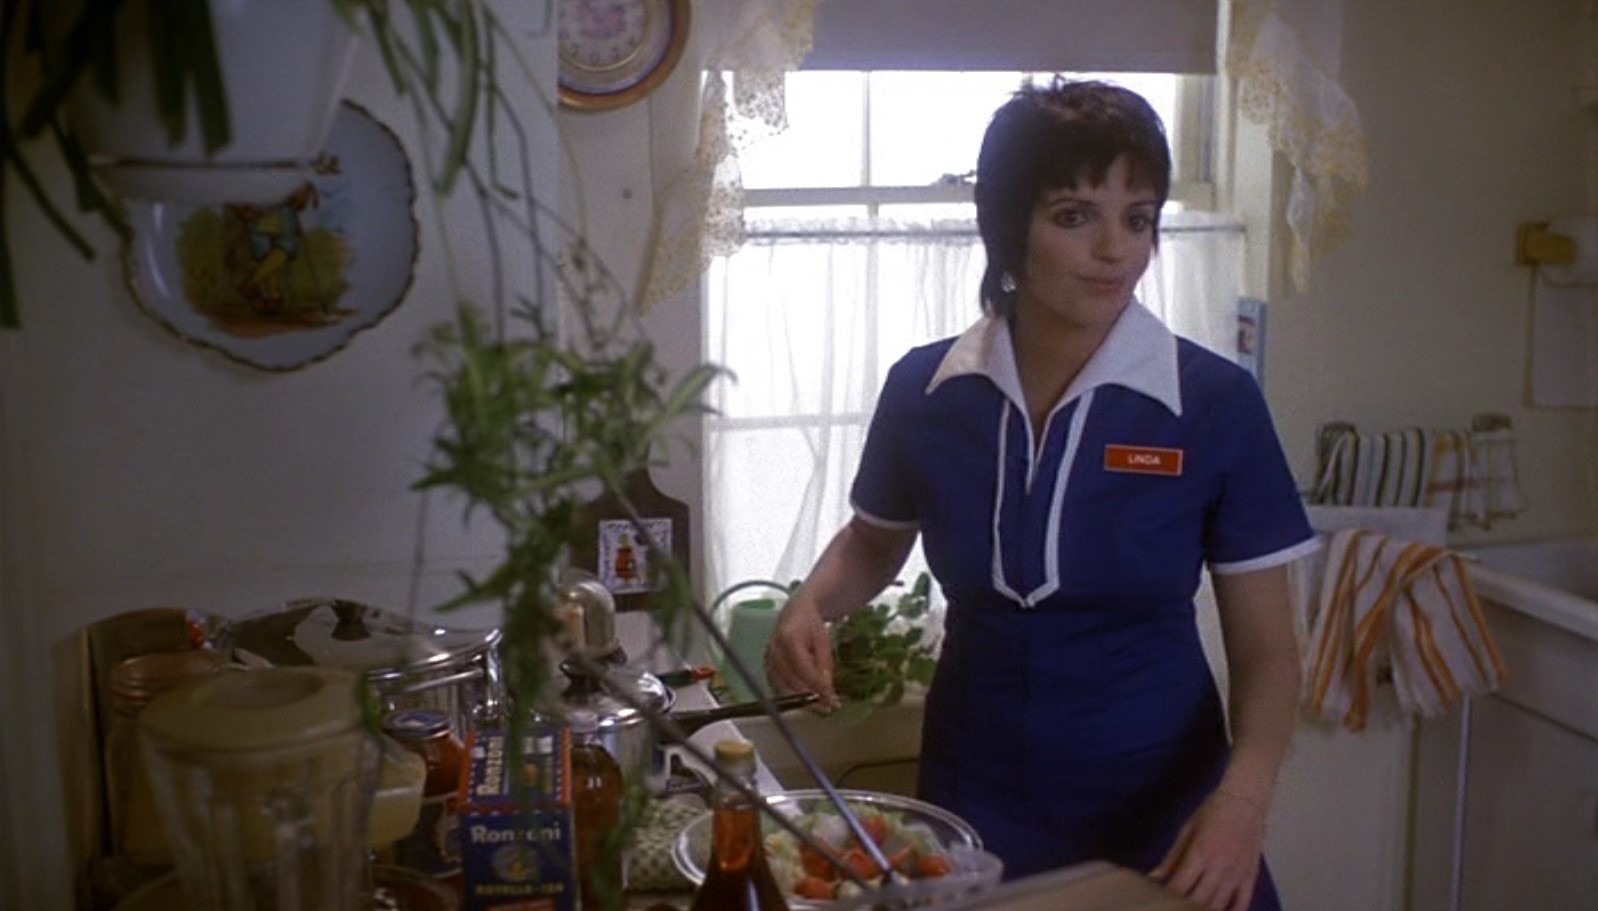 ARTHUR - Linda Marolla's (Liza Minnelli) Waitress Dress - Image 7 of 8